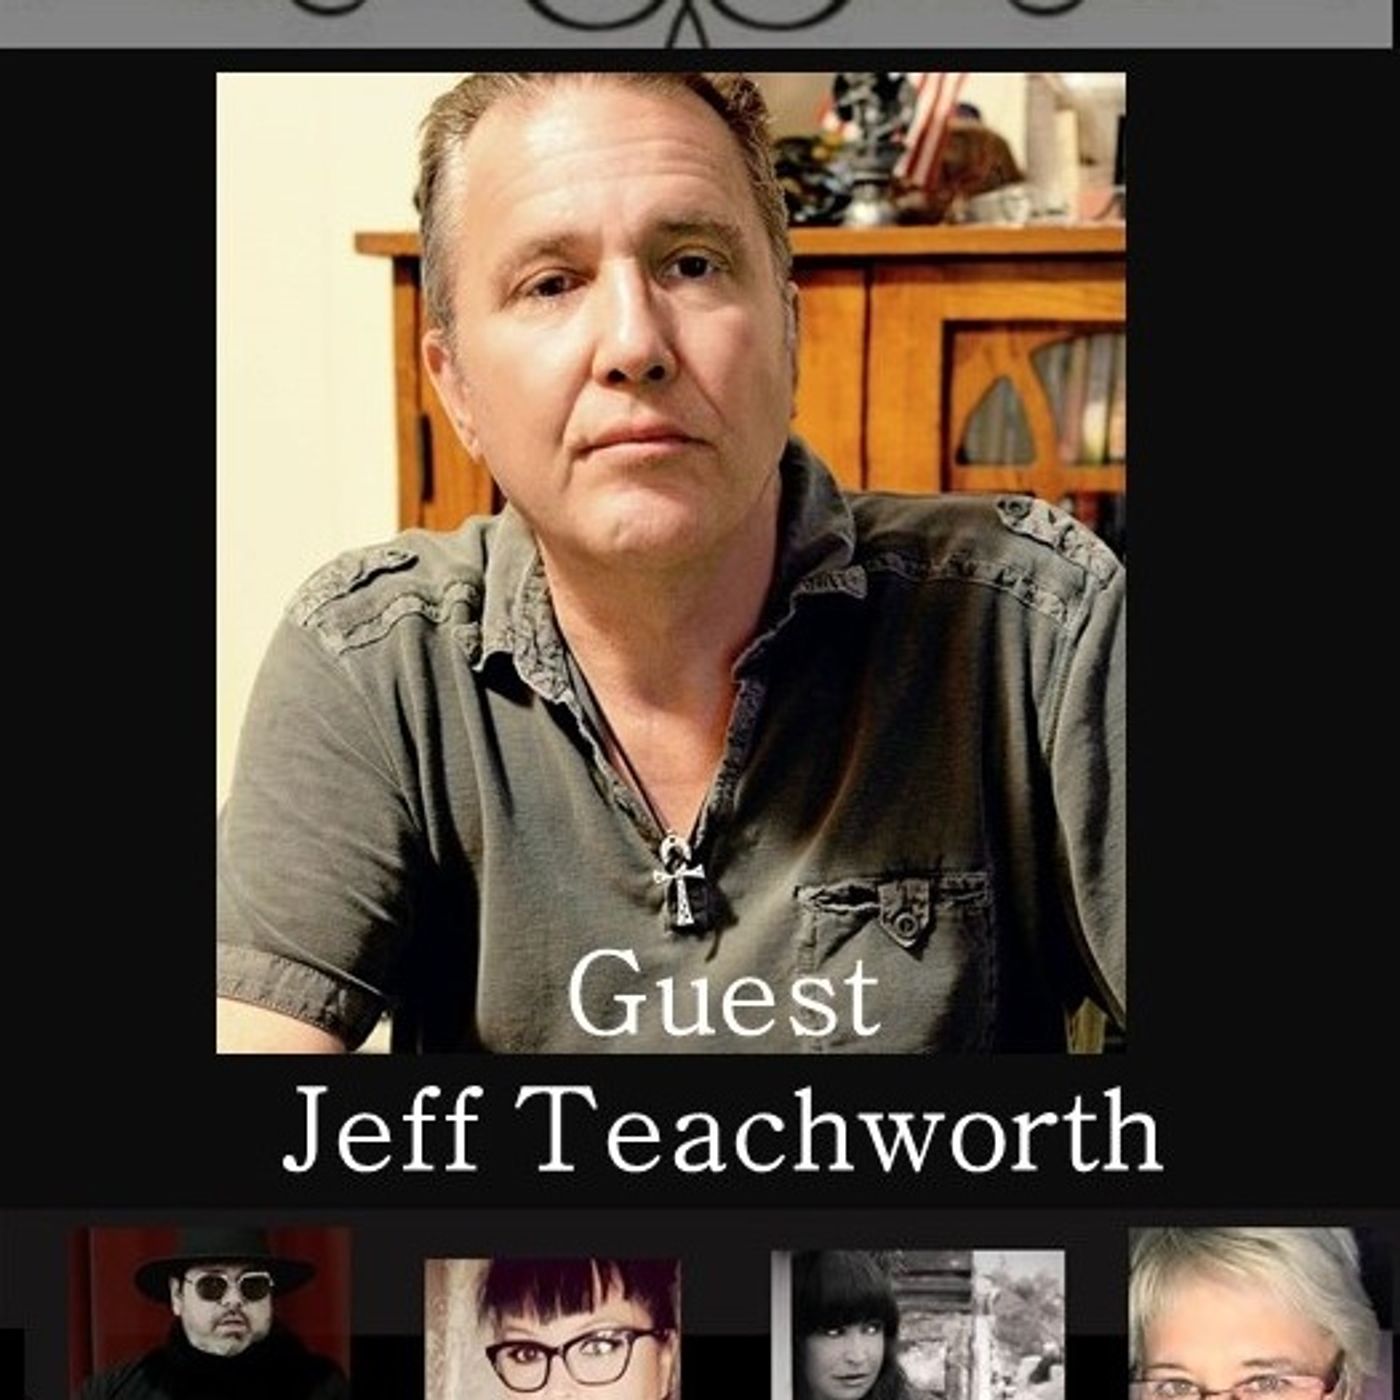 Jeff Teachworth